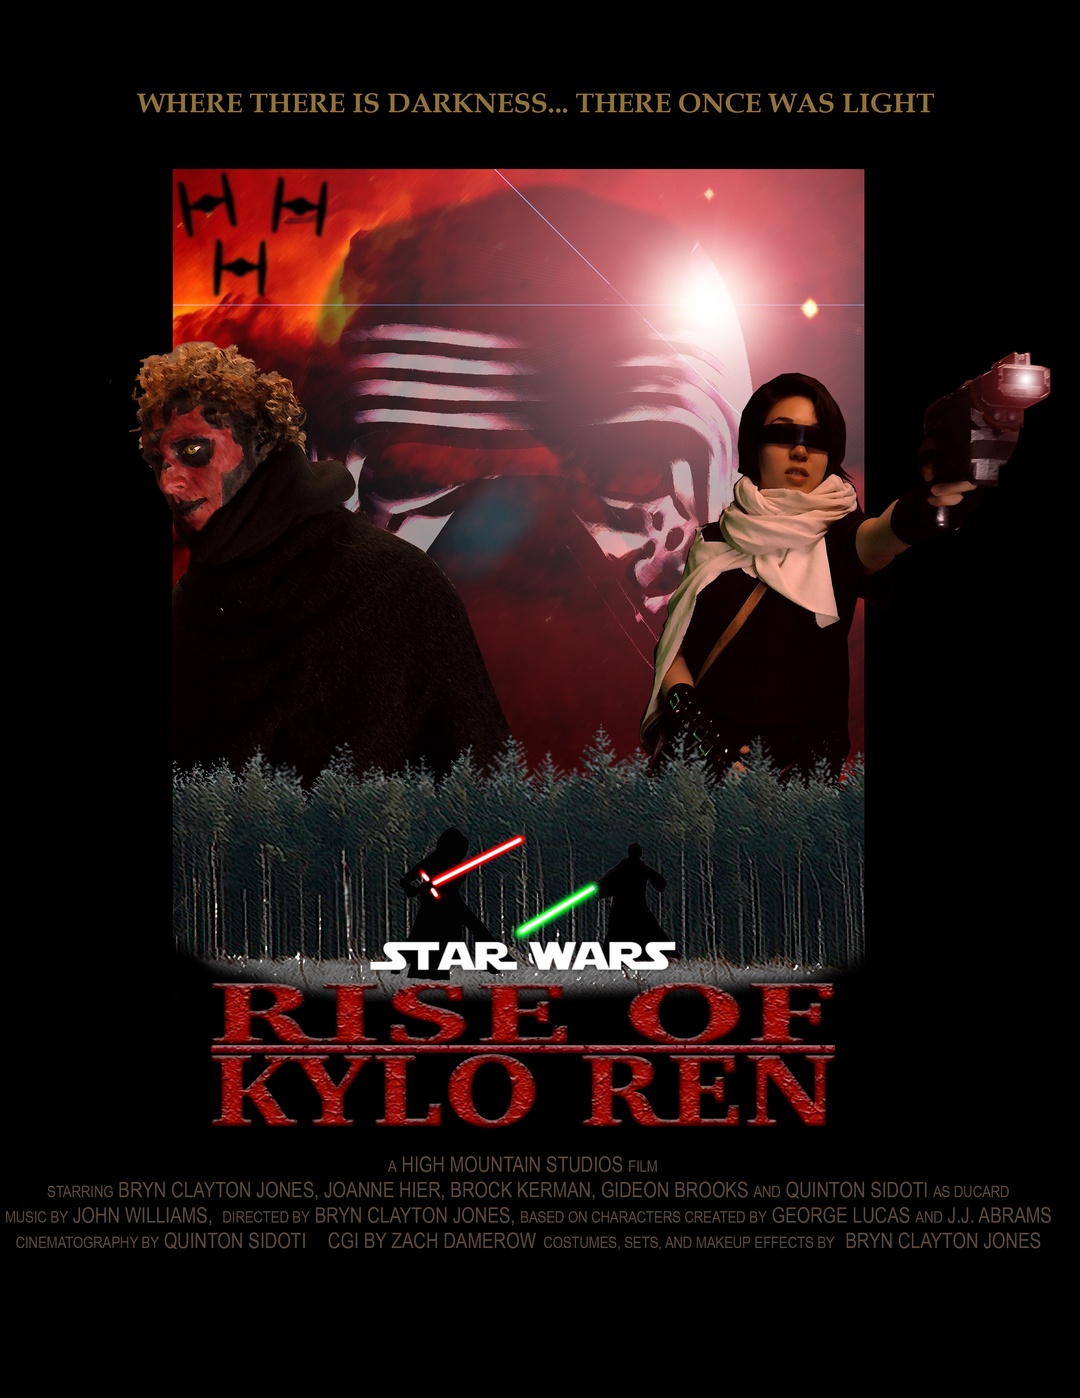 Star Wars: Rise of Kylo Ren